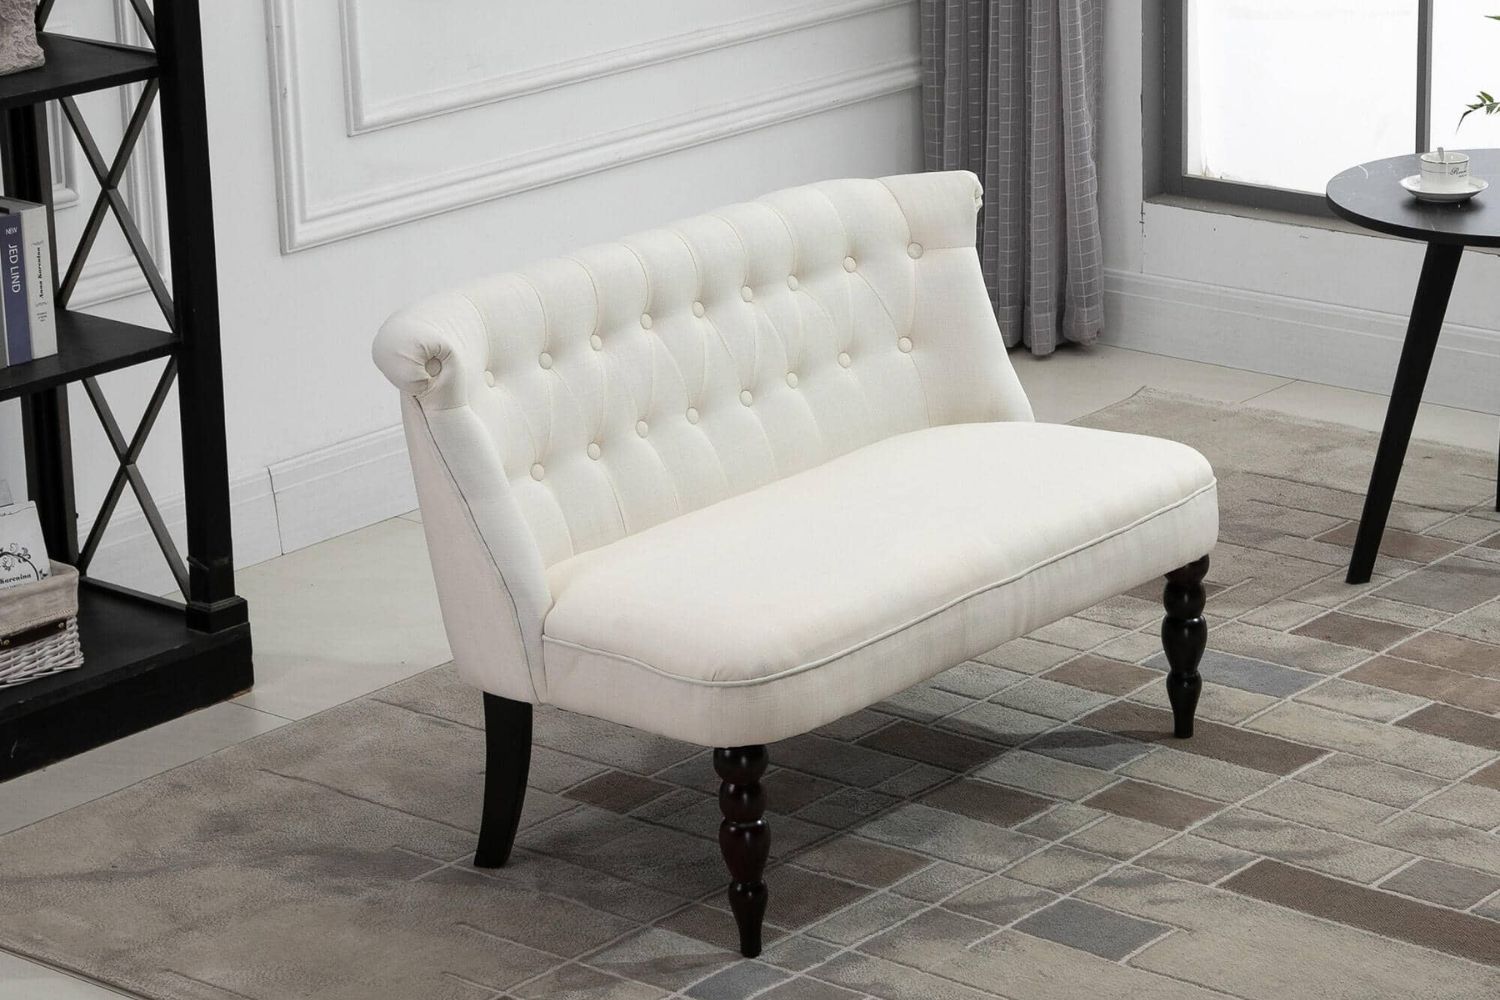 Sofas Under $500 Options: HomCom Cream White Polyester Tufted Sofa